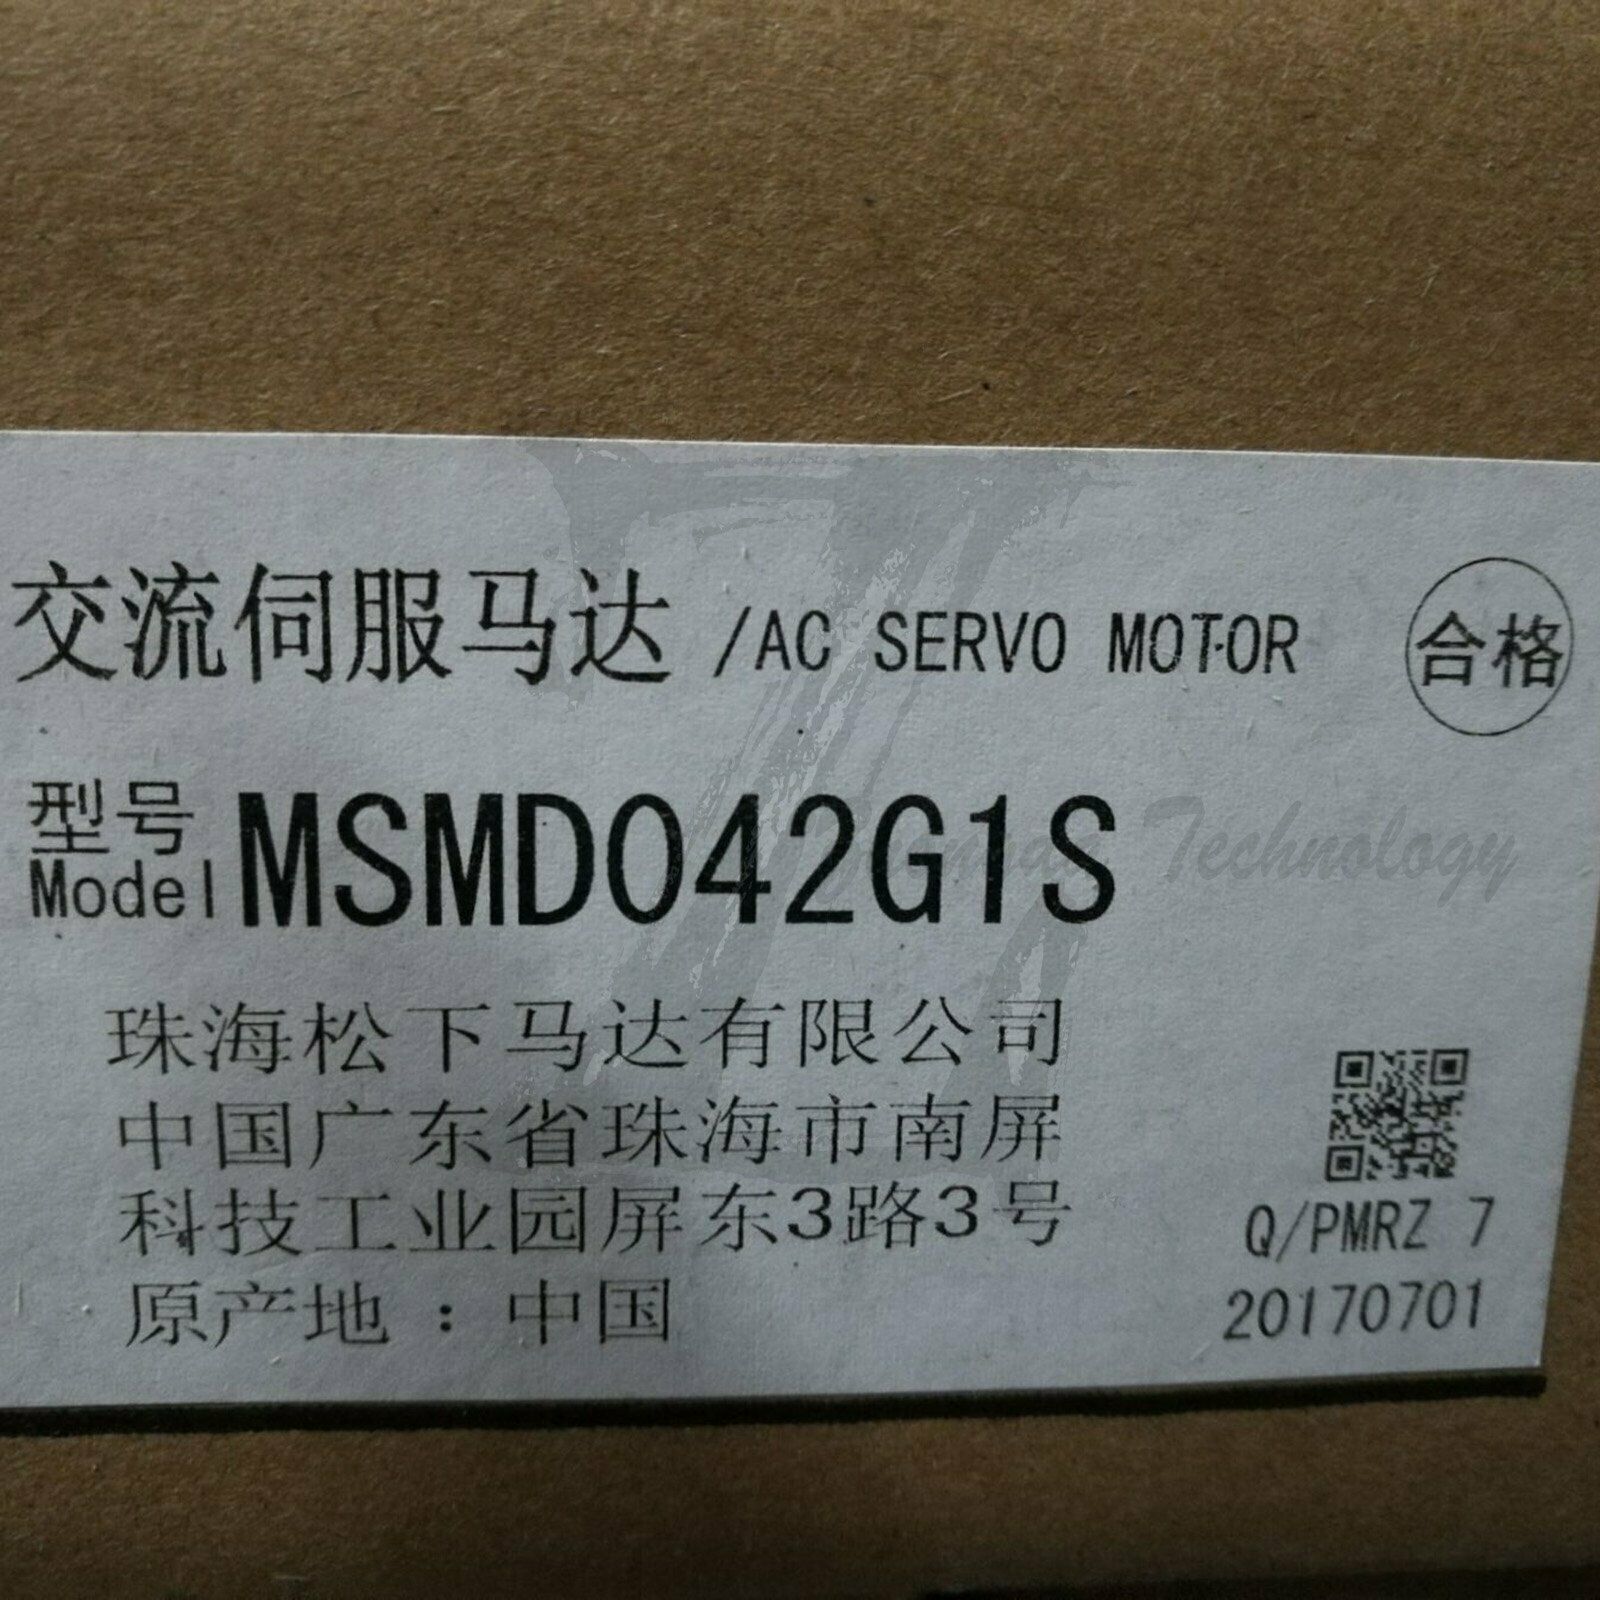 New In Box 1PC Panasonic MSMD042G1S Servo Motor